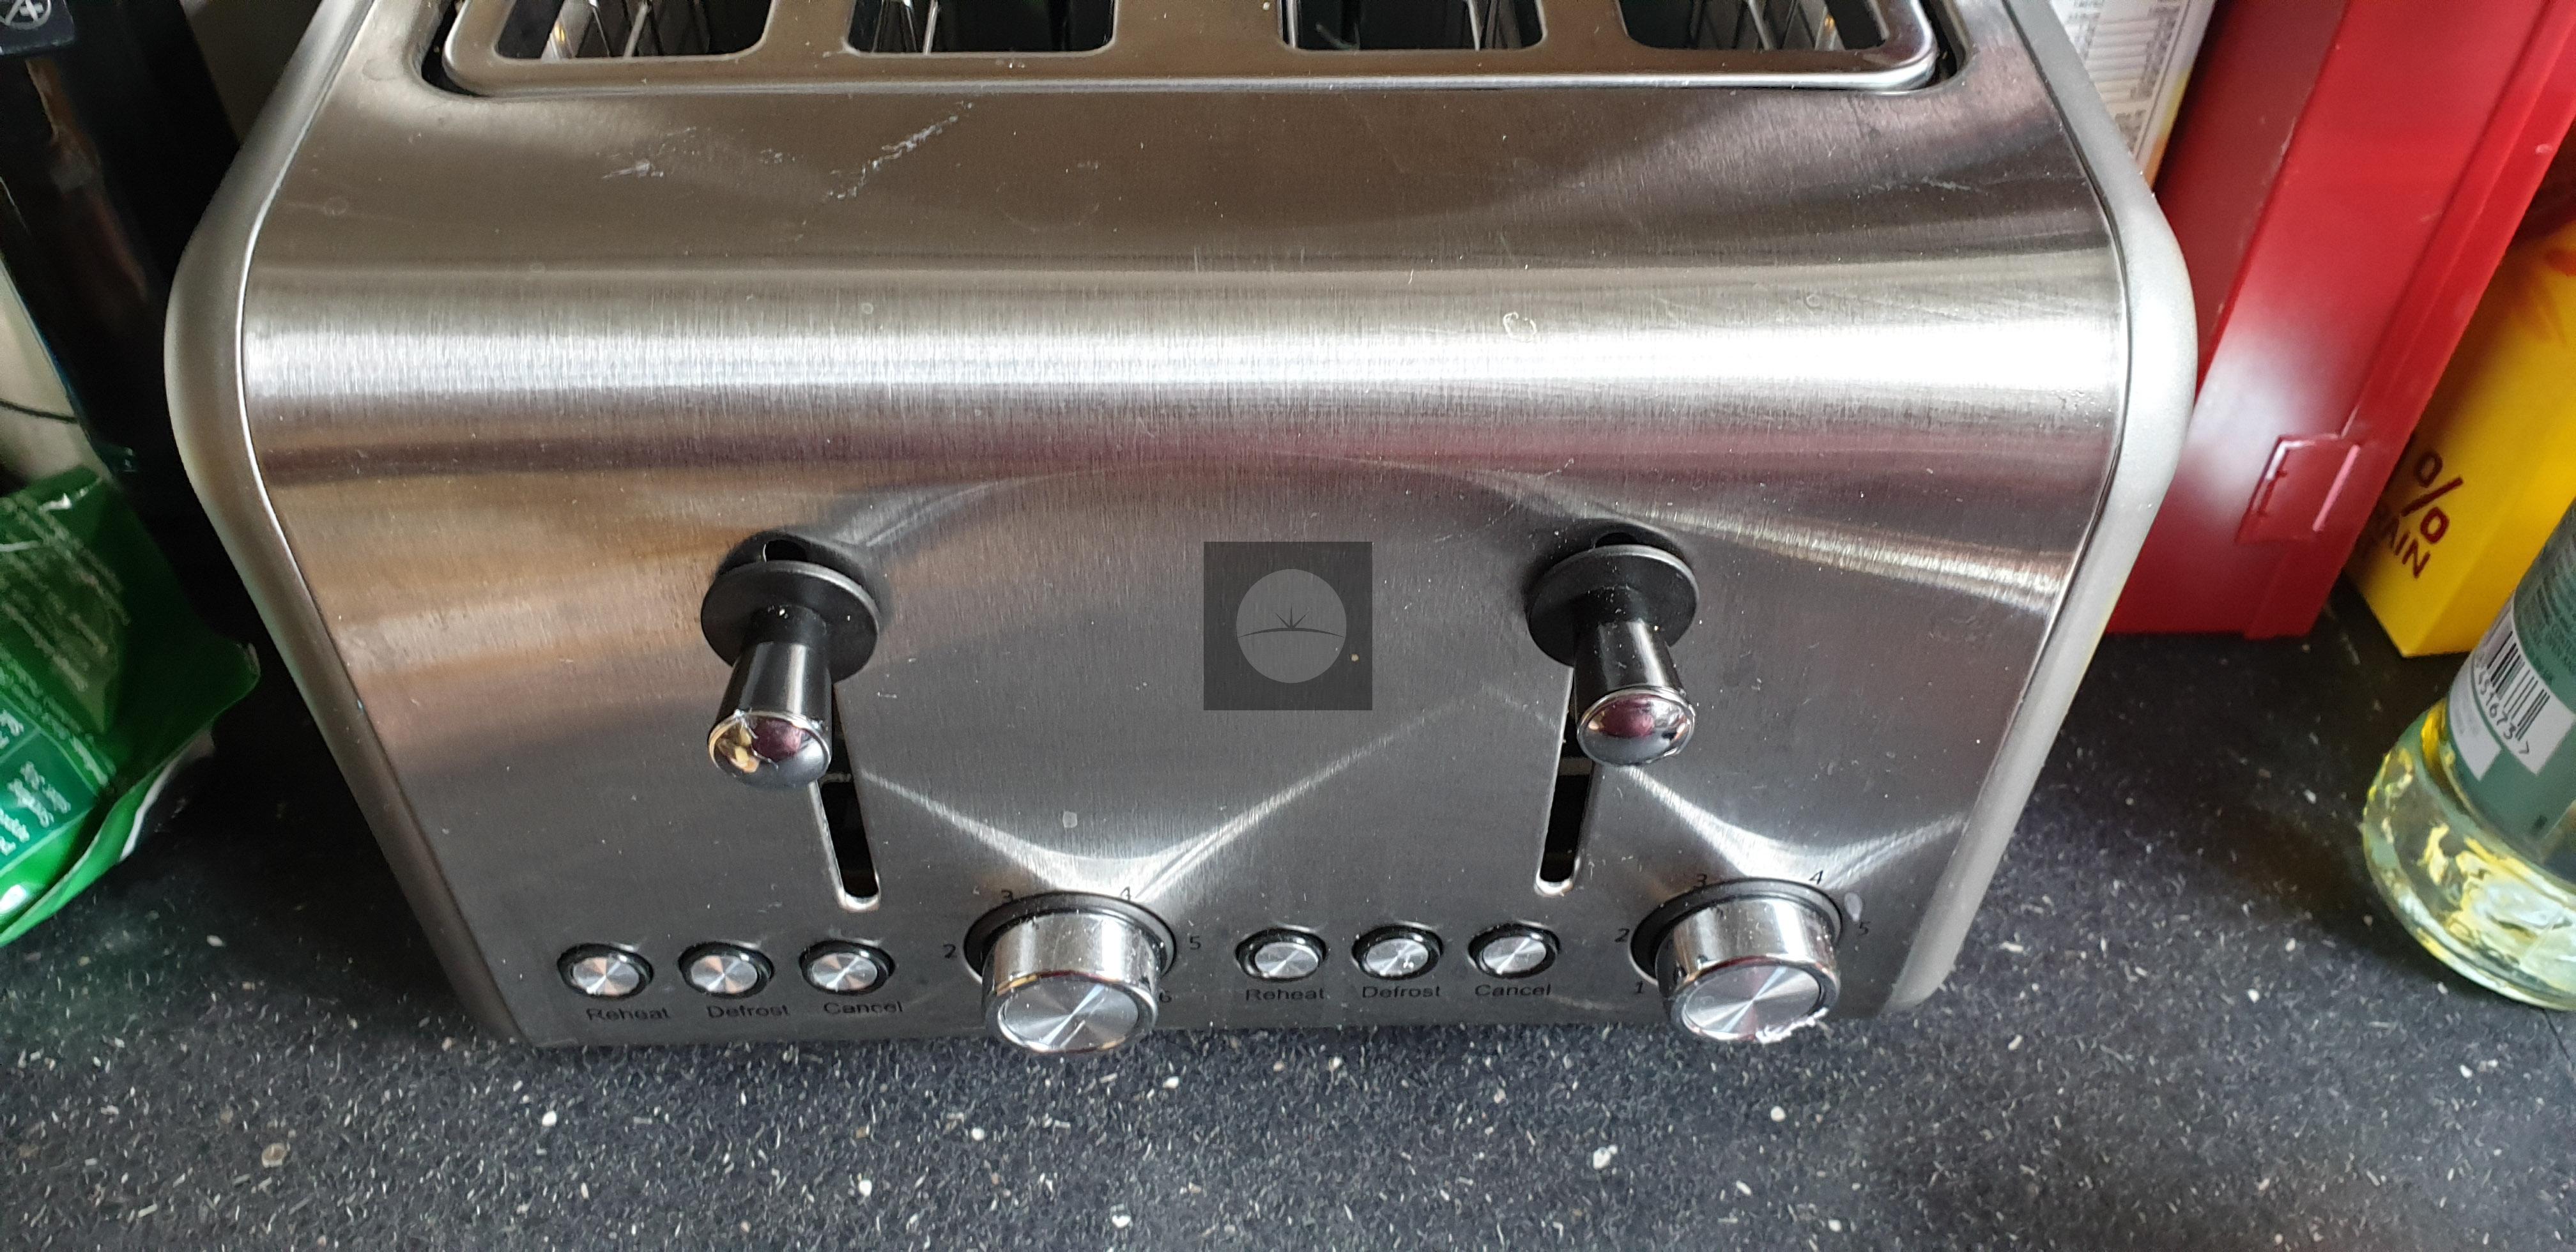 Salter Metallics 4-Slice Toaster Review